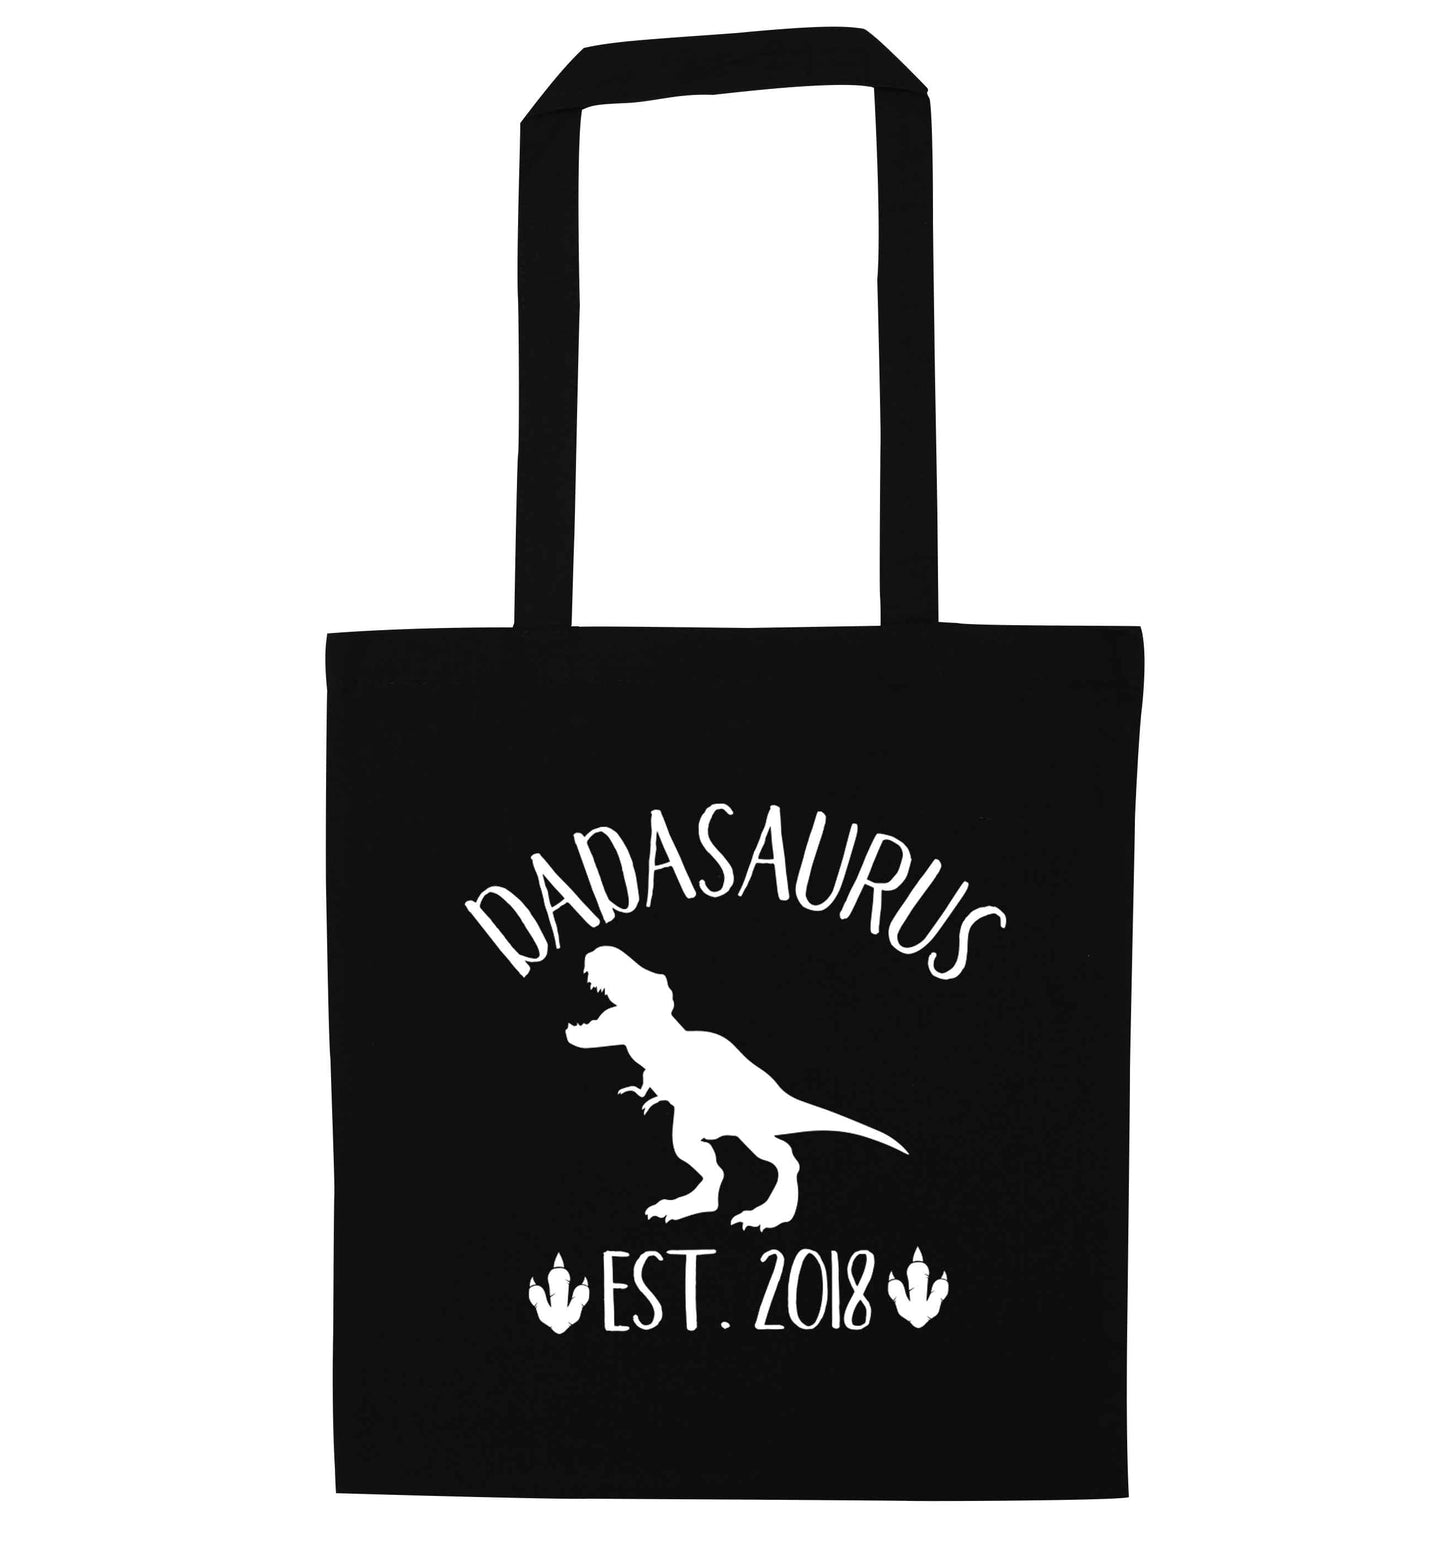 Personalised dadasaurus since (custom date) black tote bag